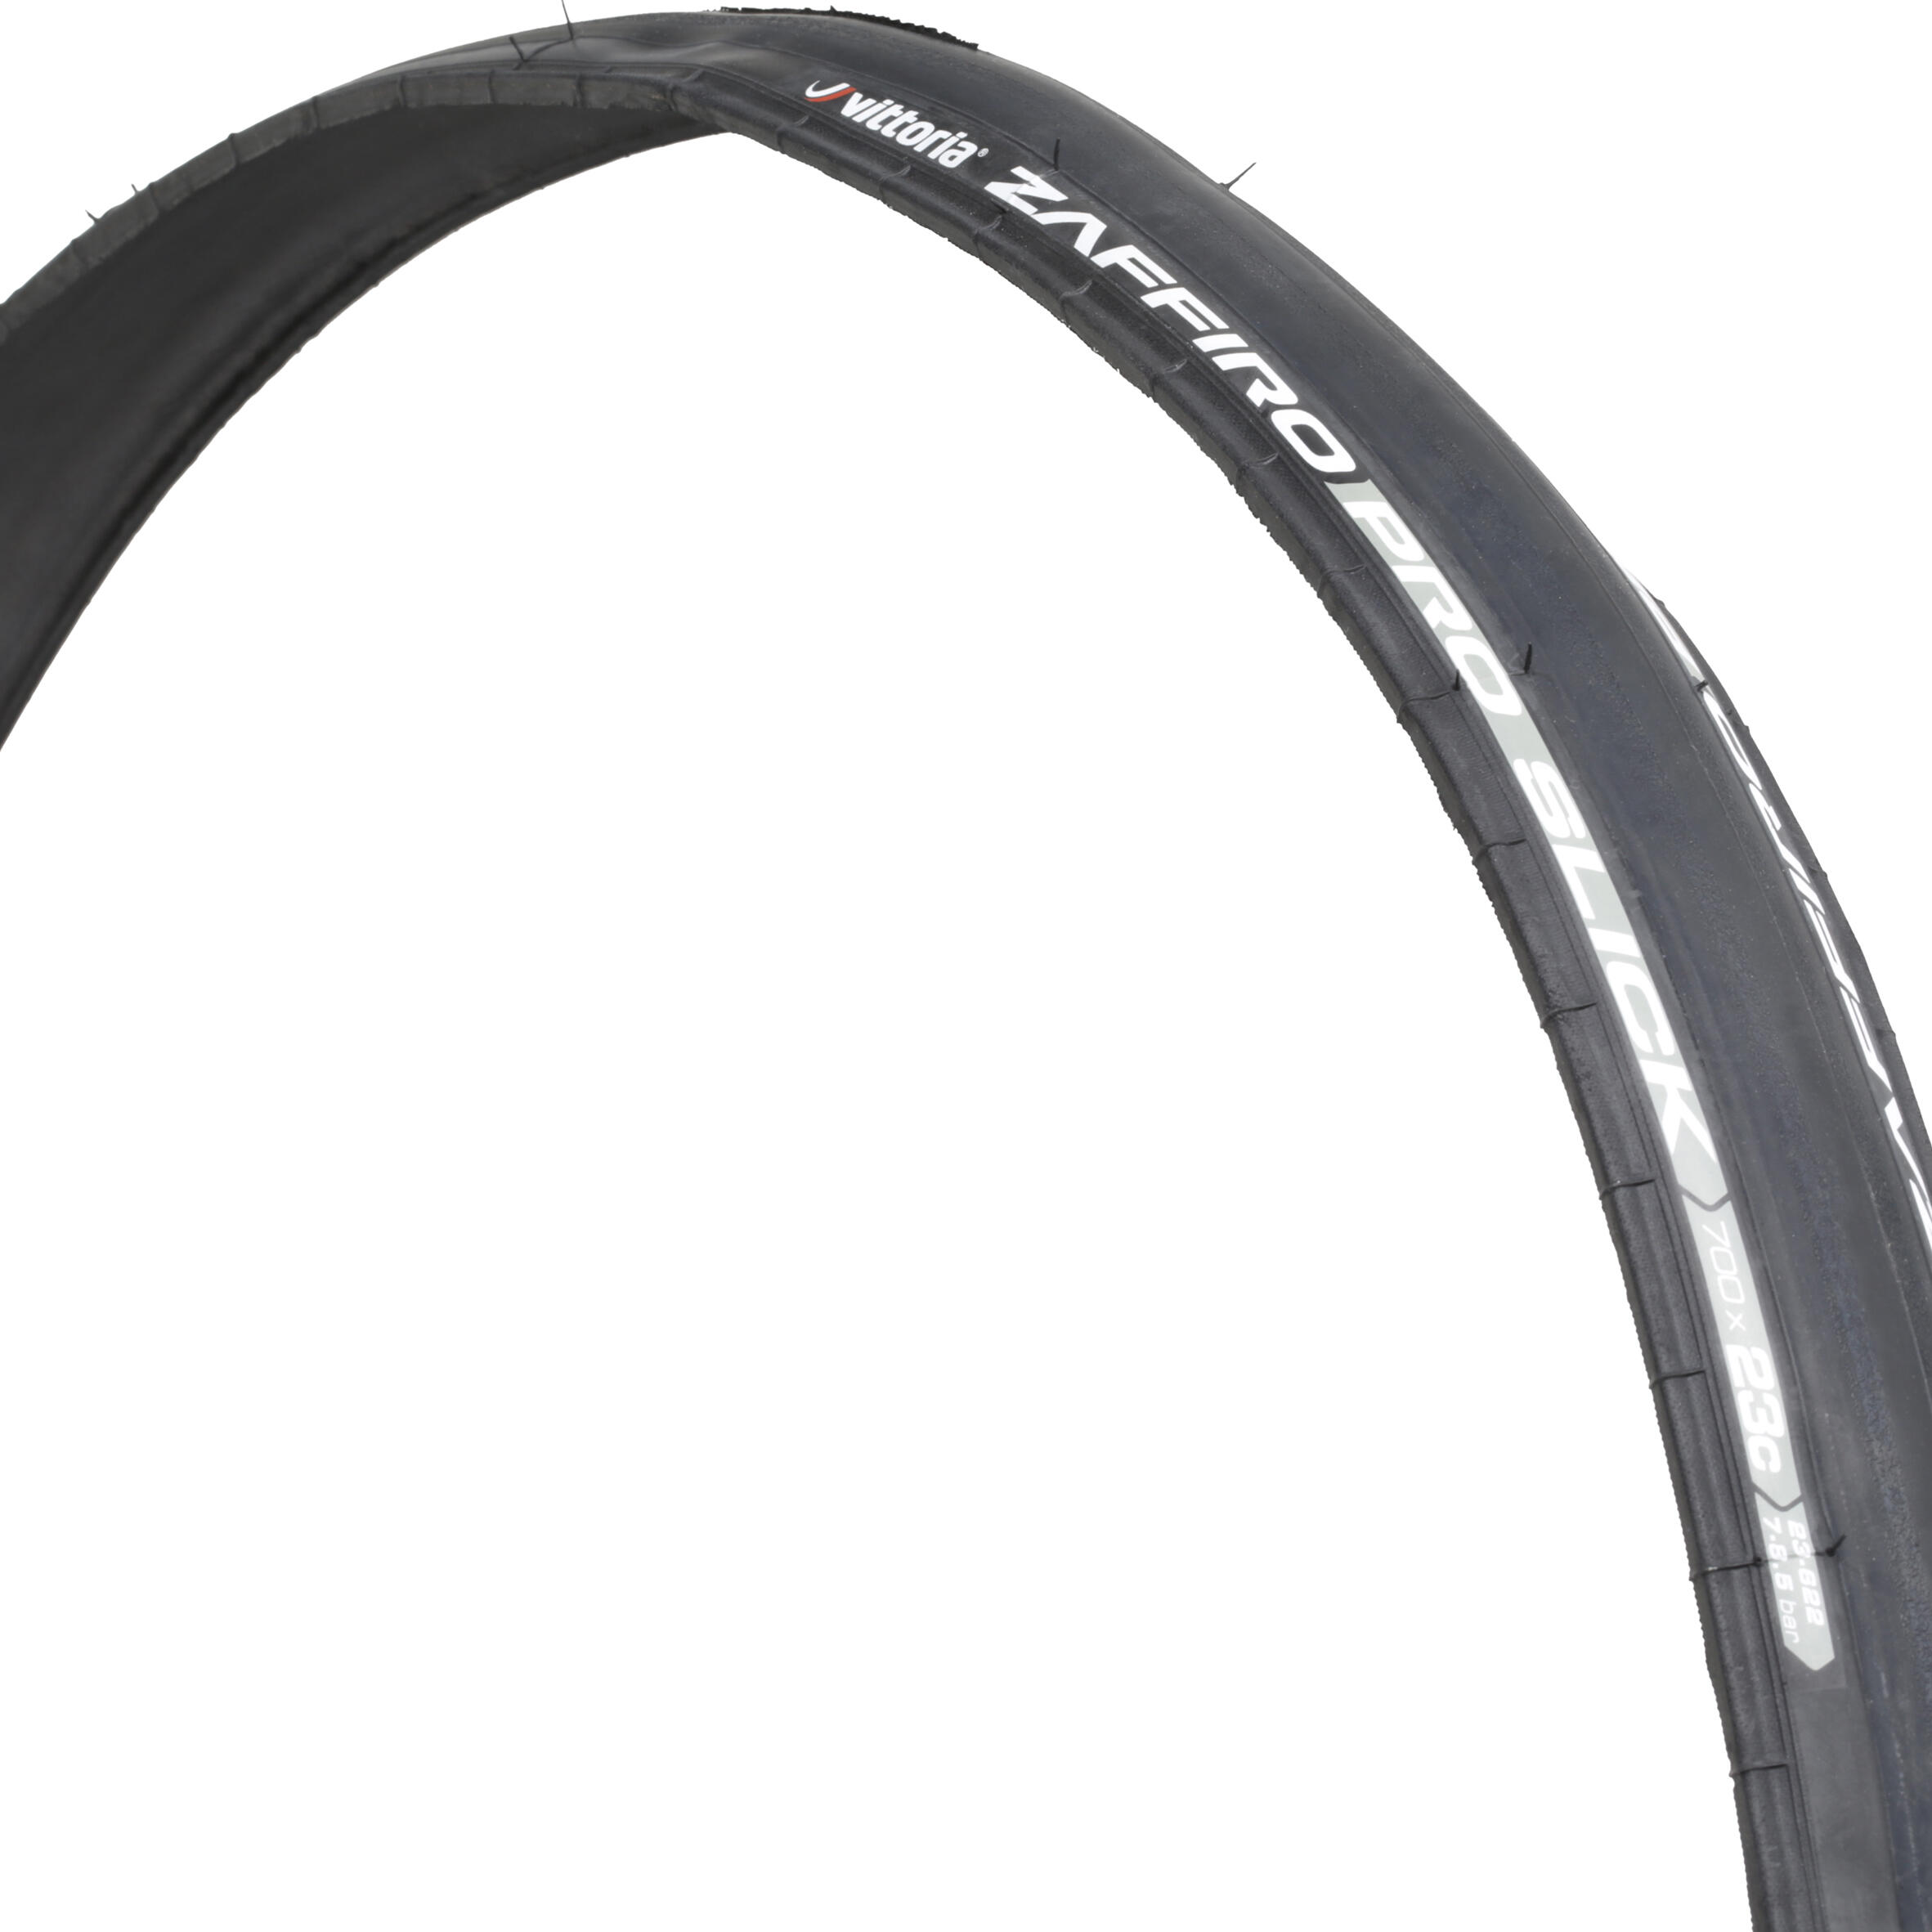 Zaffiro Pro Slick Road Tyre - 700x23 3/4